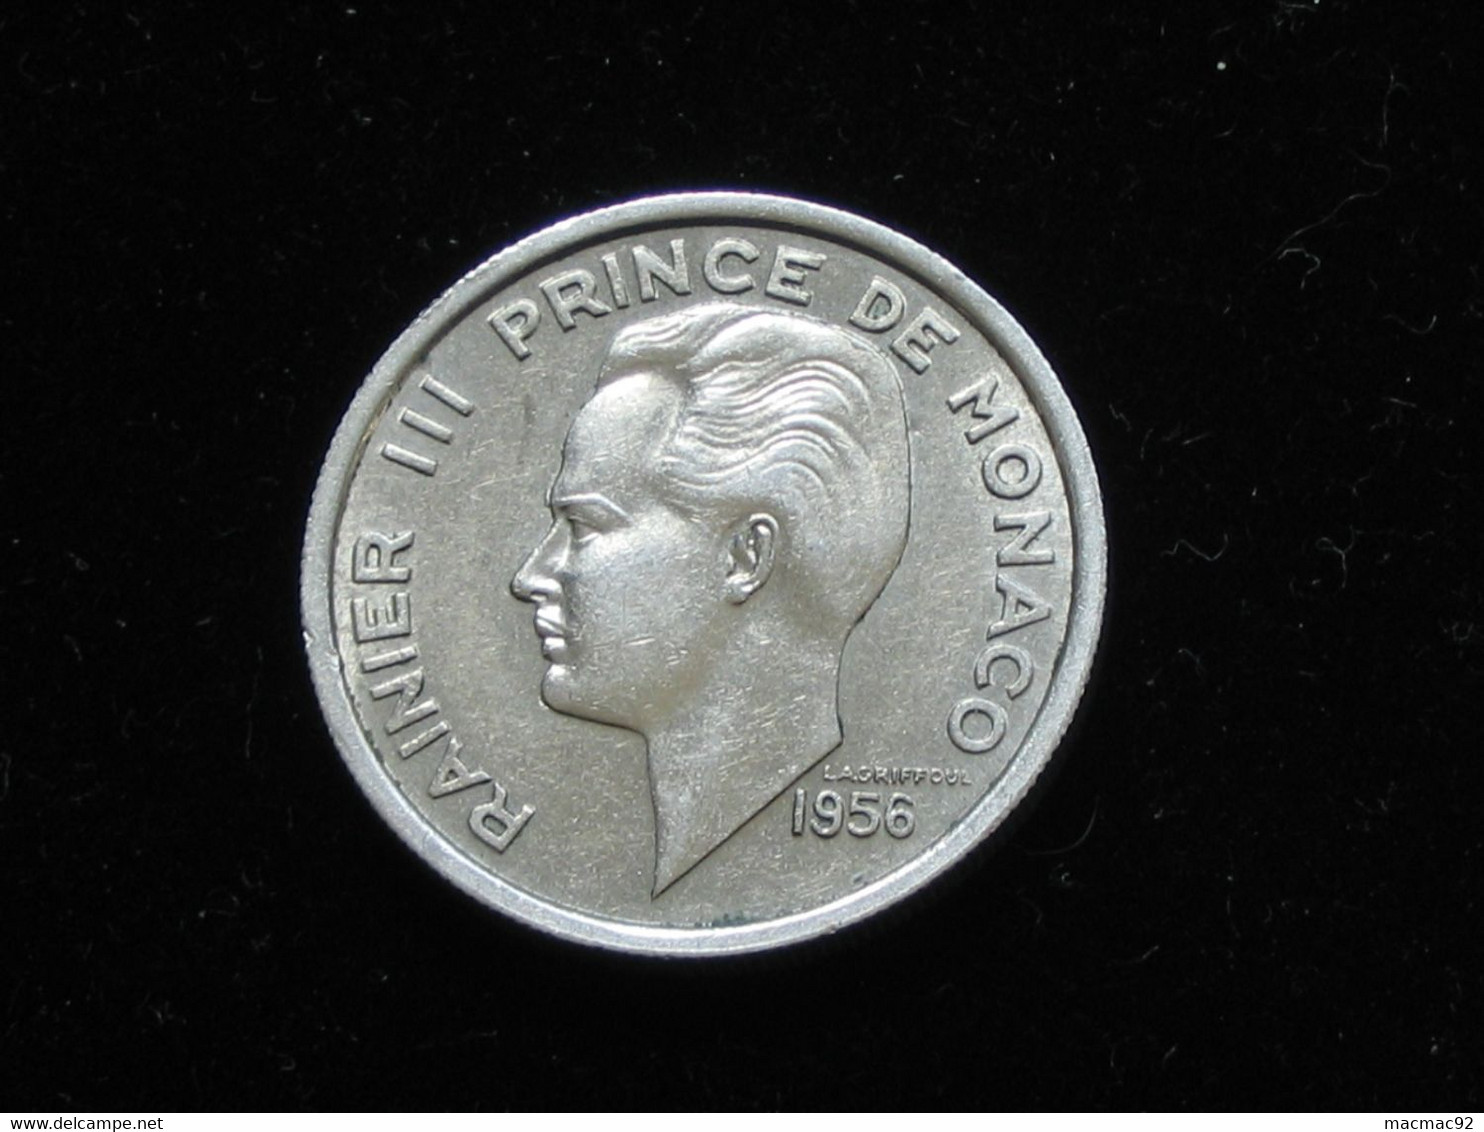 MONACO - 100 Frs 1956 - Rainier III Prince De Monaco **** EN ACHAT IMMEDIAT **** - 1949-1956 Alte Francs